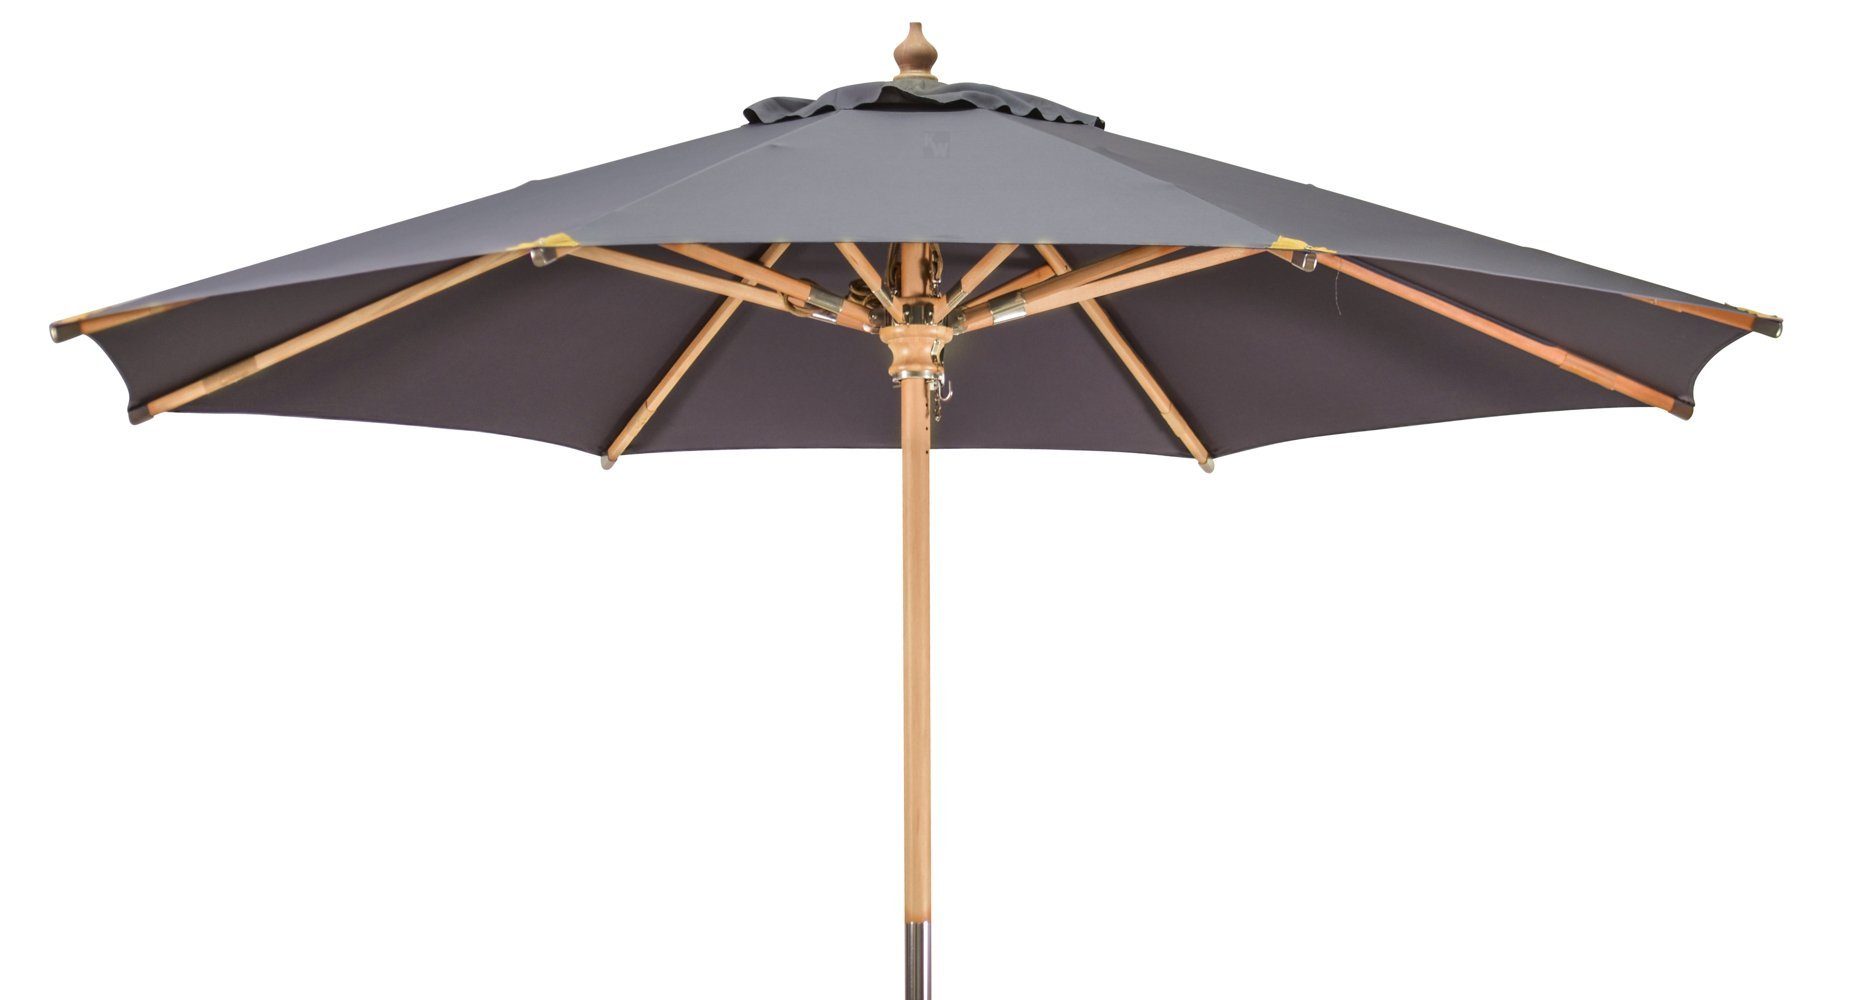 Kai Wiechmann Sonnenschirm Stylischer Balkonschirm 350 cm als hochwertiger Schattenspender, Gartenschirm aus Holz mit Windauslass & UPF 50+